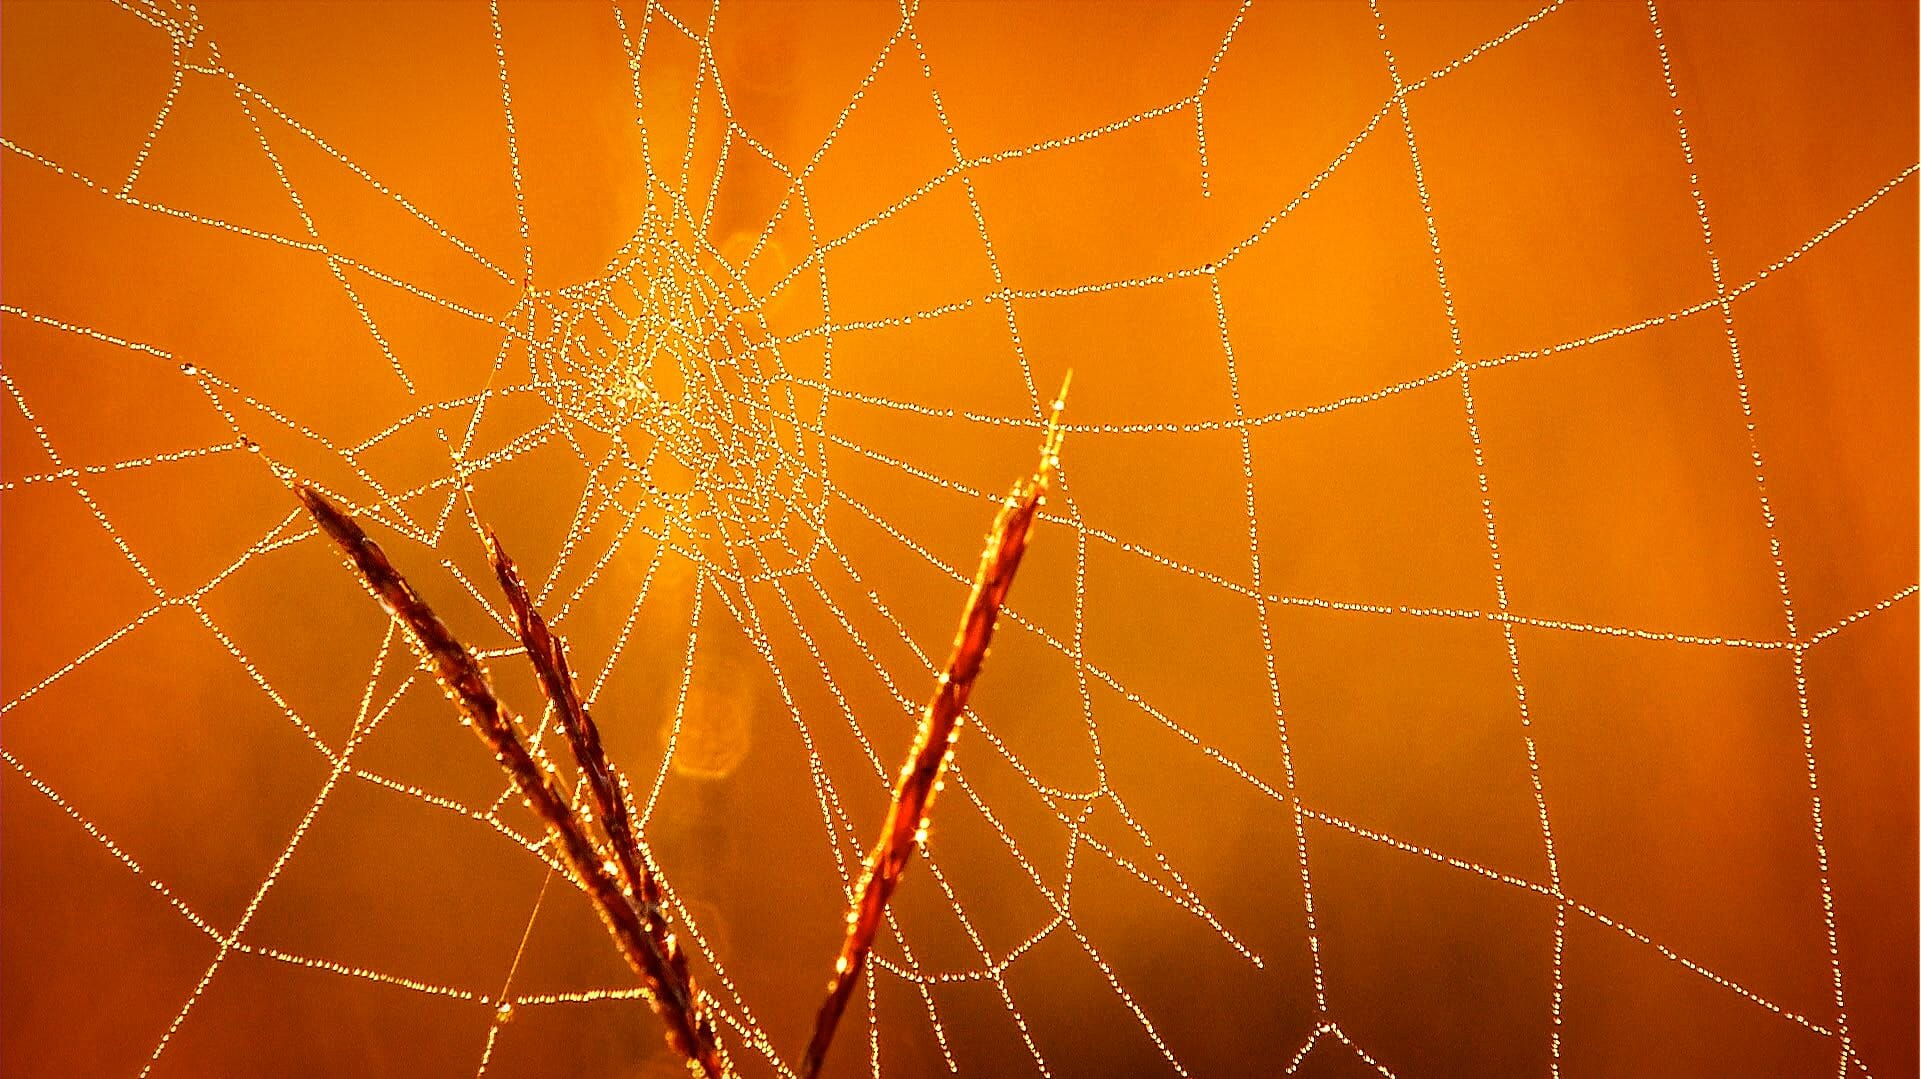 dew covered spiderweb